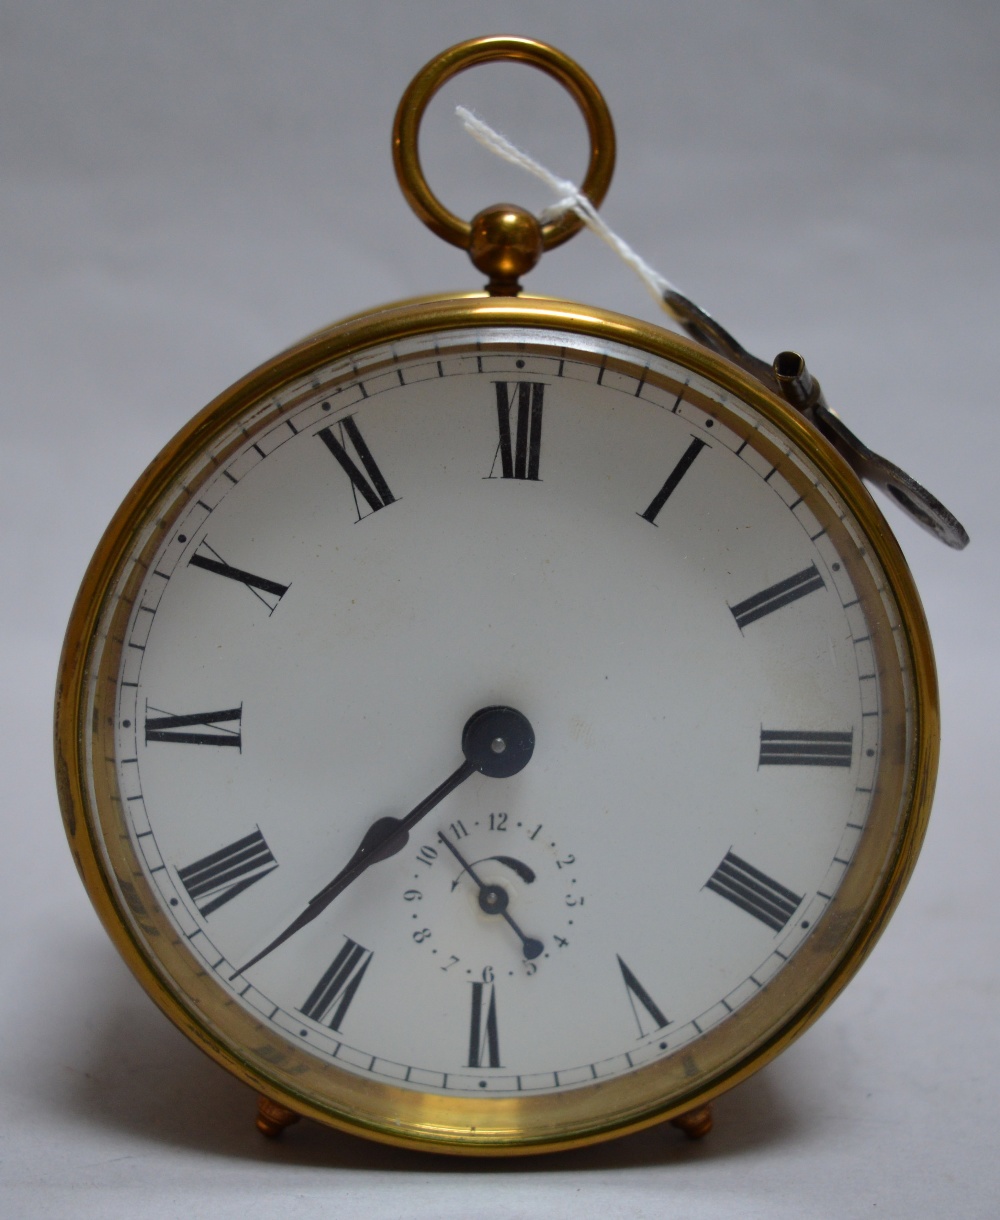 Brass cased, round enamel faced chiming alarm clock, with key. Diameter 9.5cm.